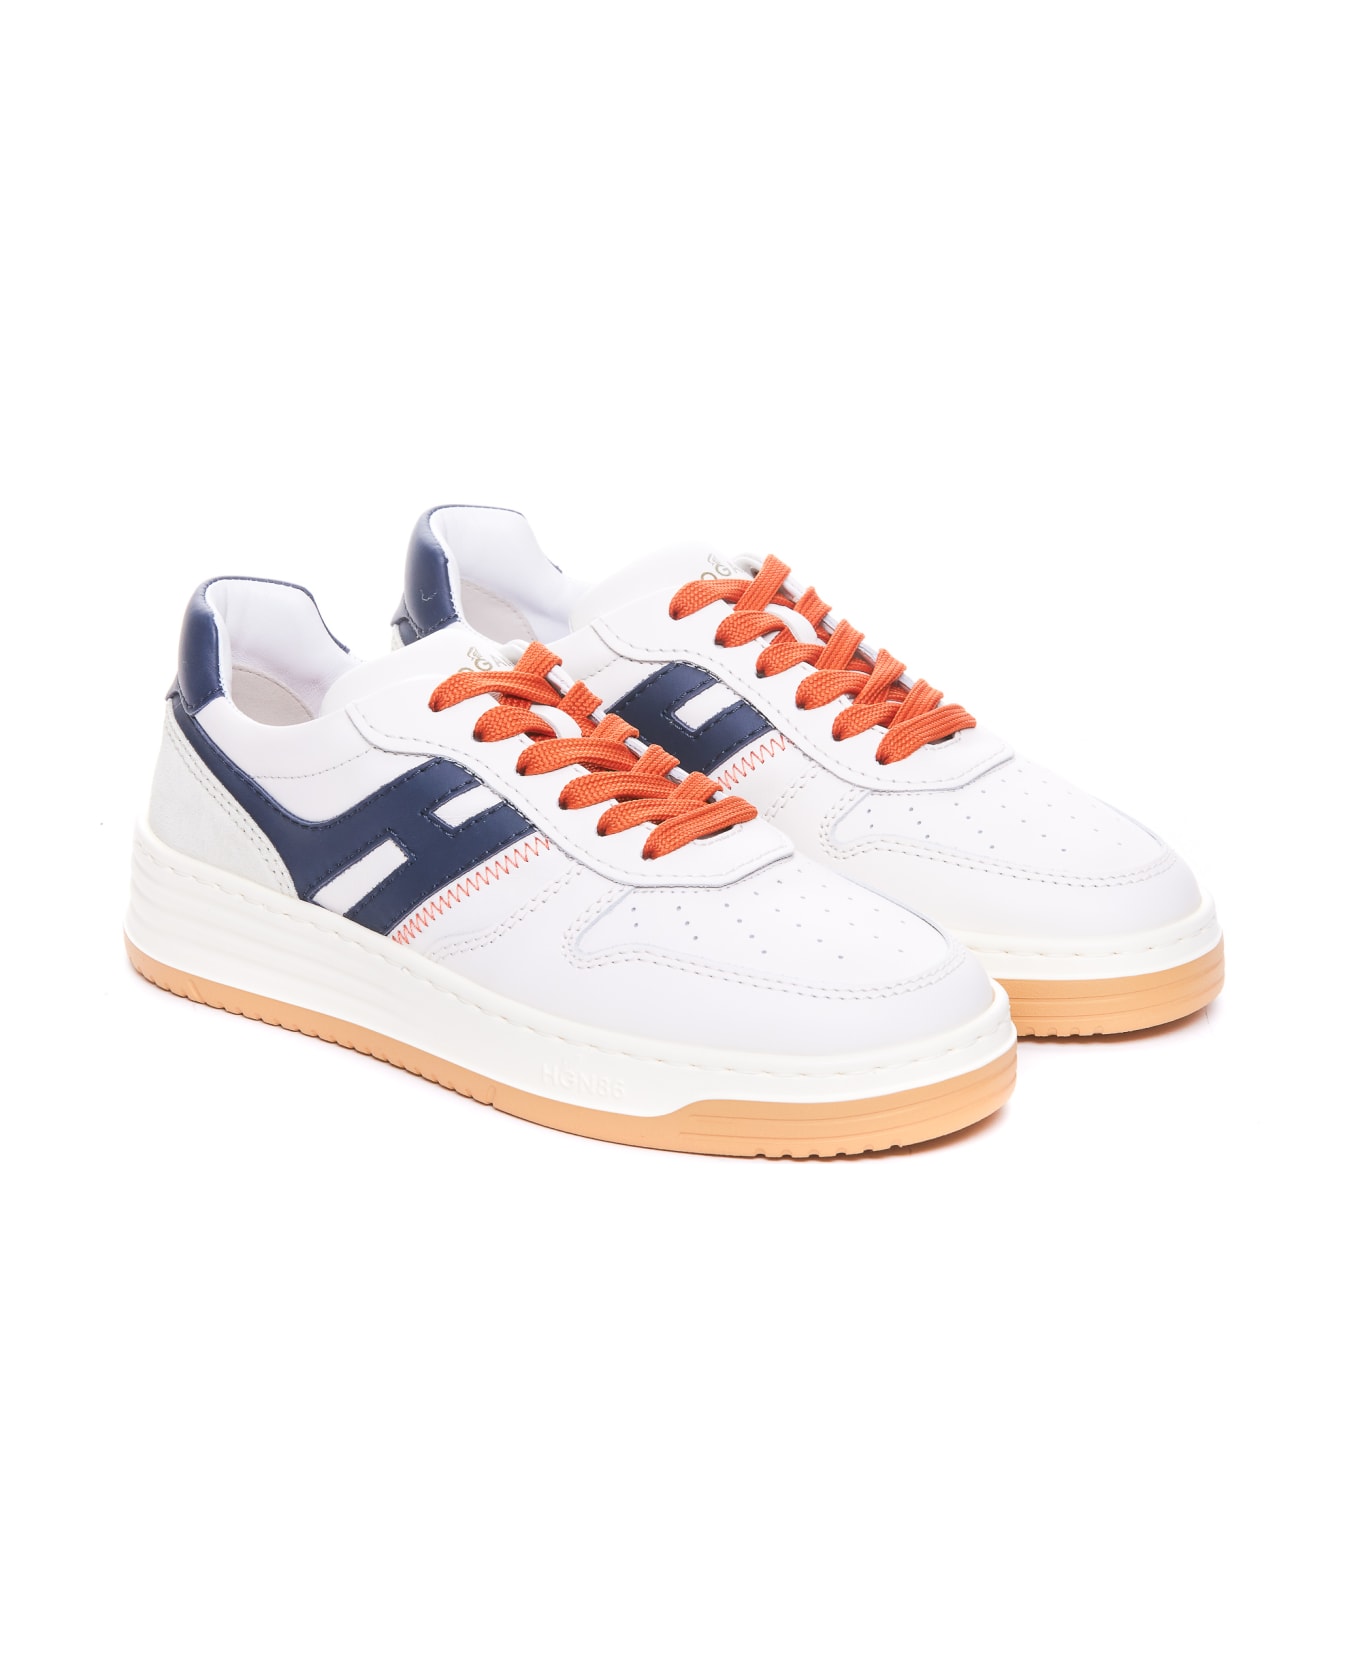 Hogan H630 Sneakers - Yogurt/blu